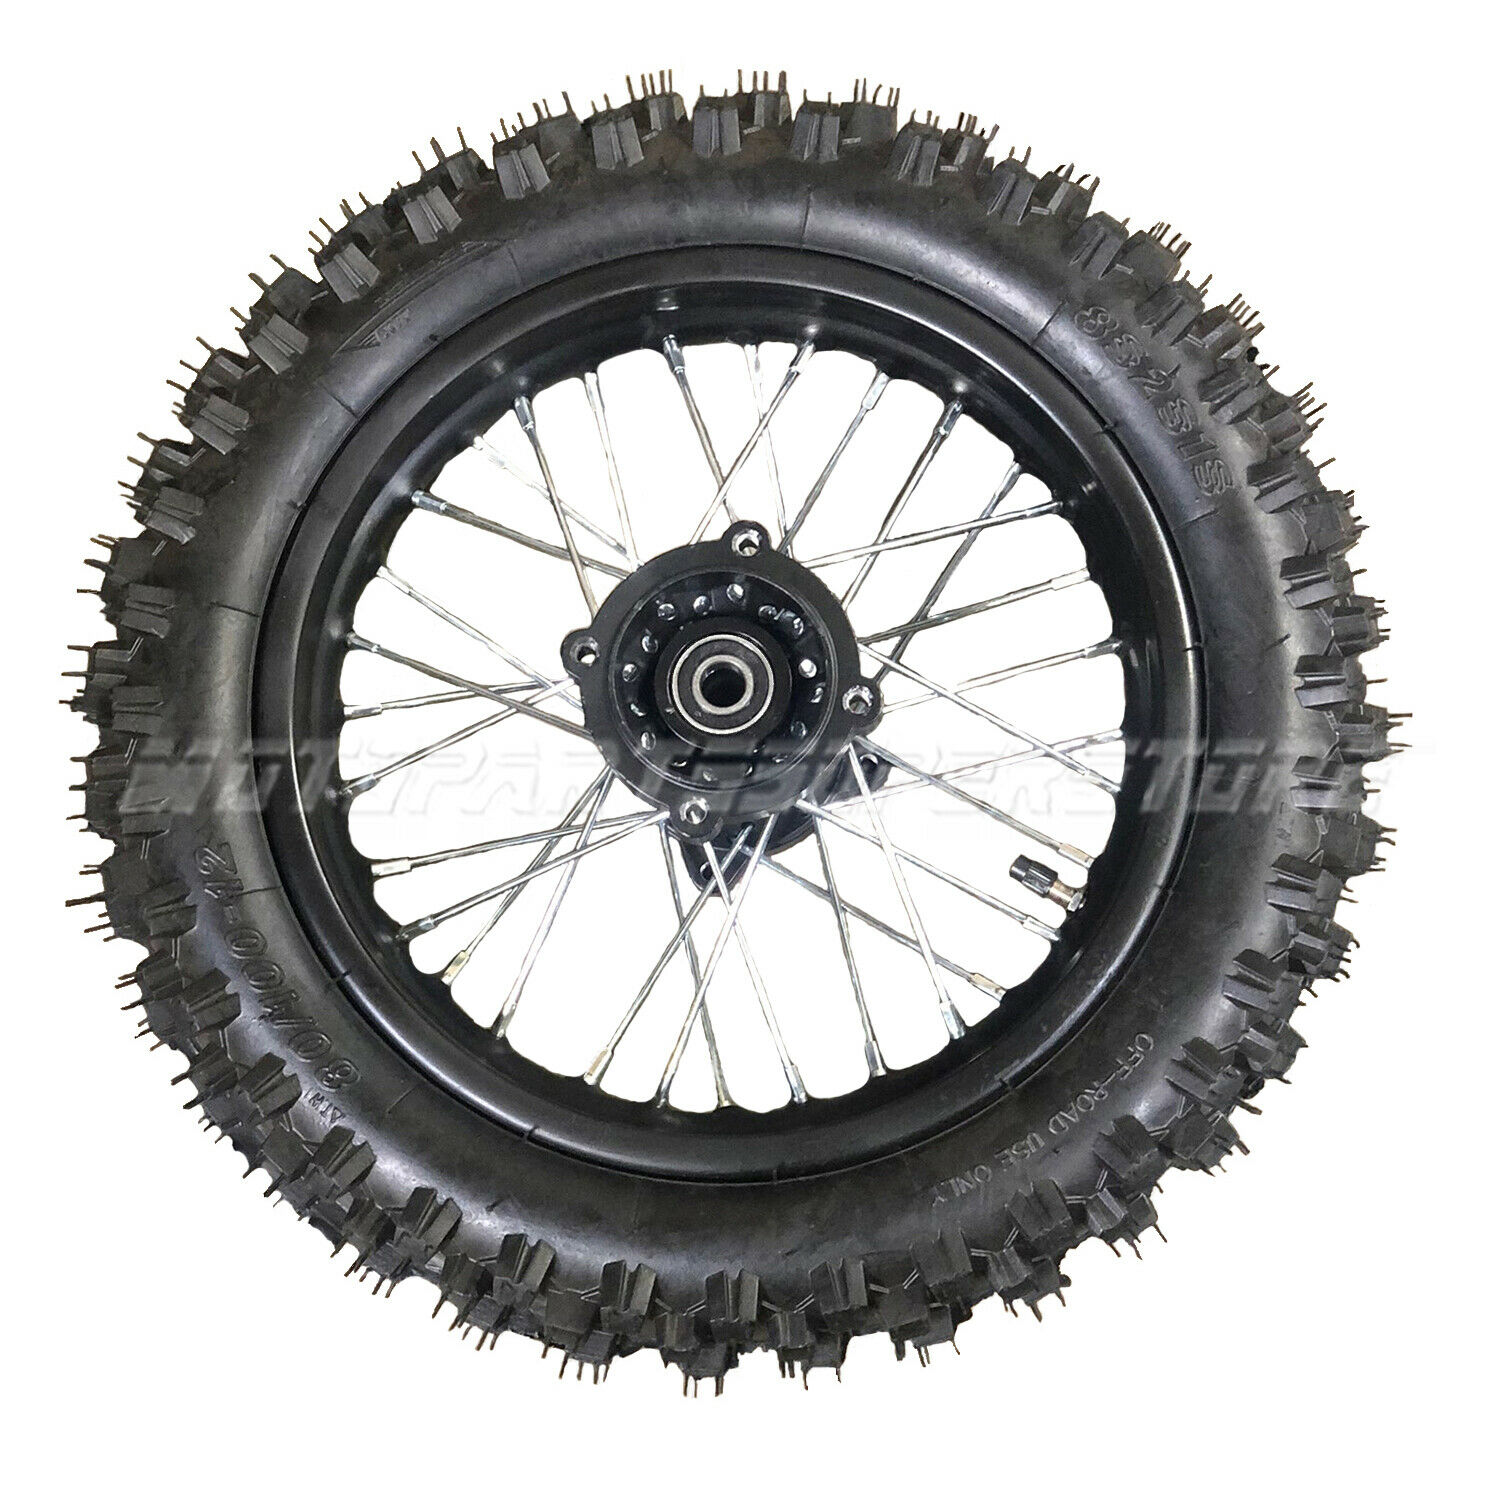 12" Rear Wheel Rim Tire Assembly For 70cc 90cc 110cc 125cc Dirt Bike Taotao Ssr